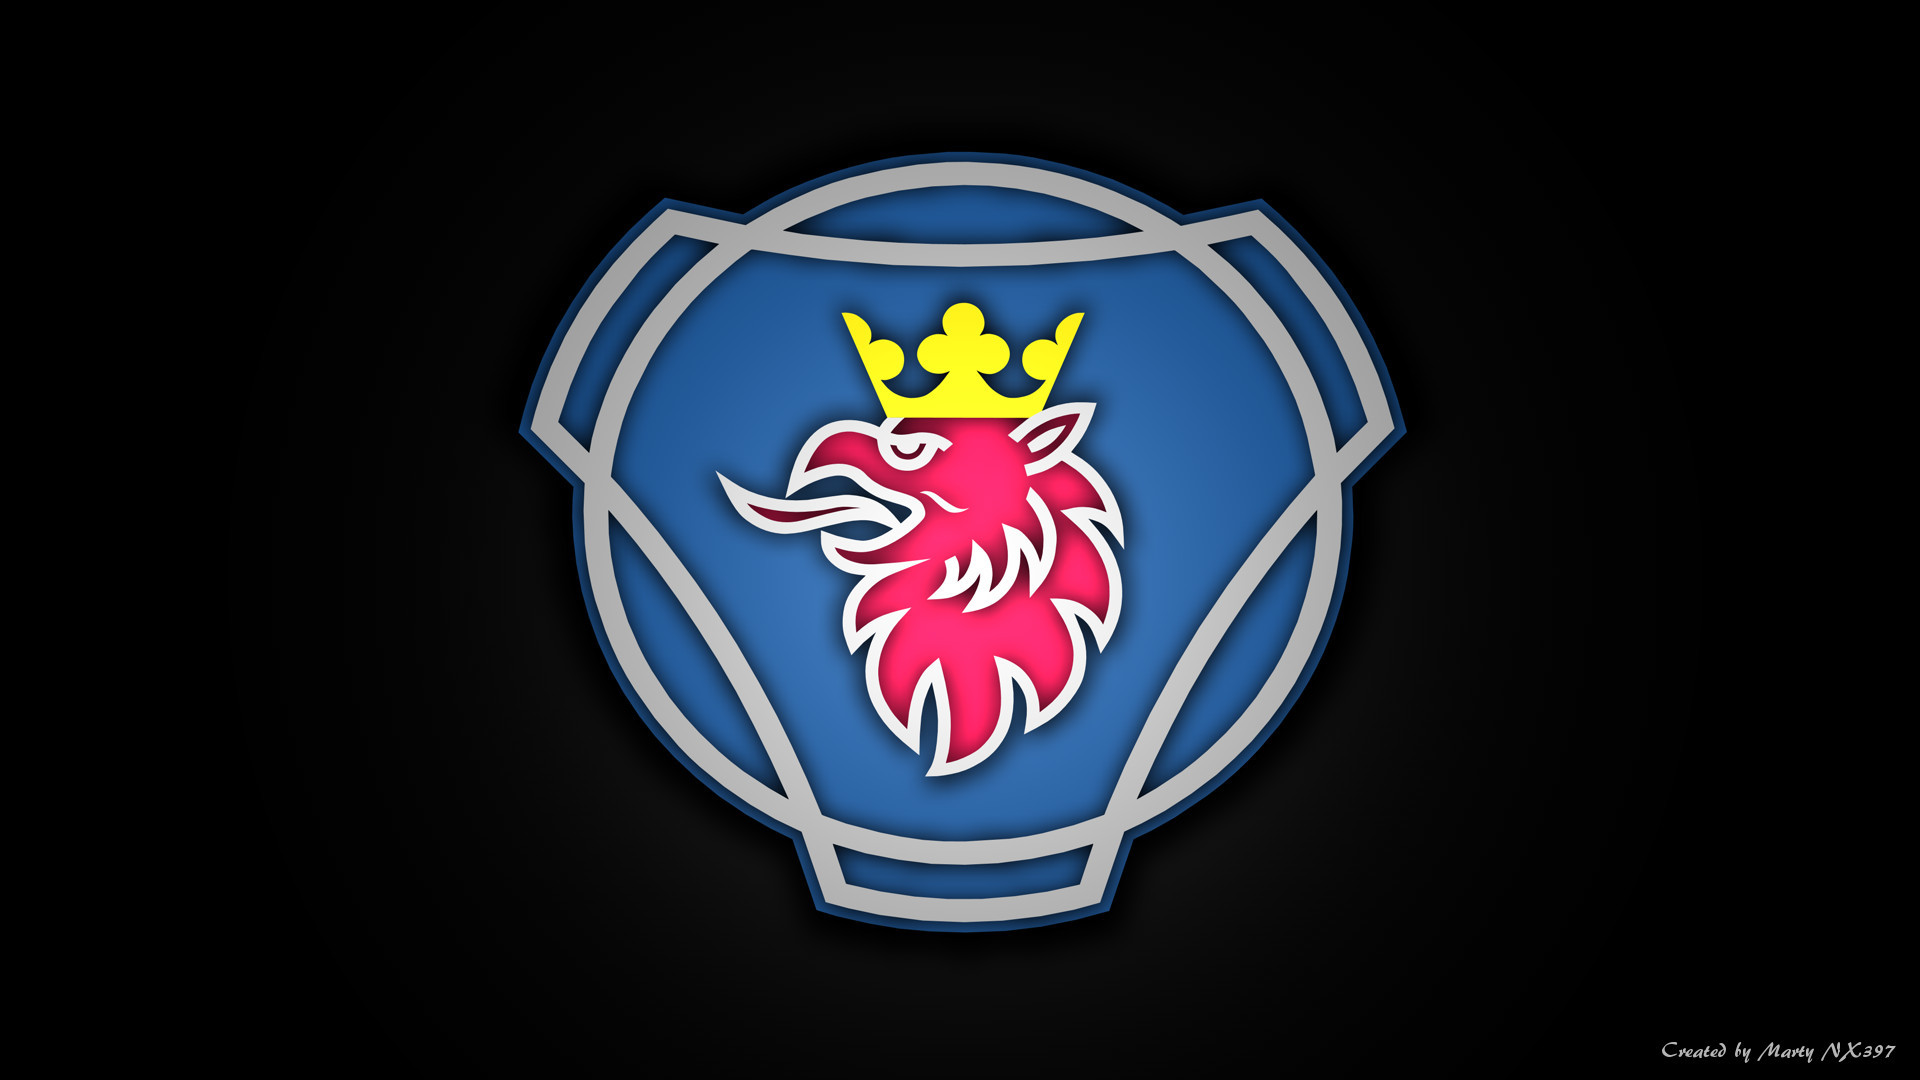 Scania Logo Wallpaper